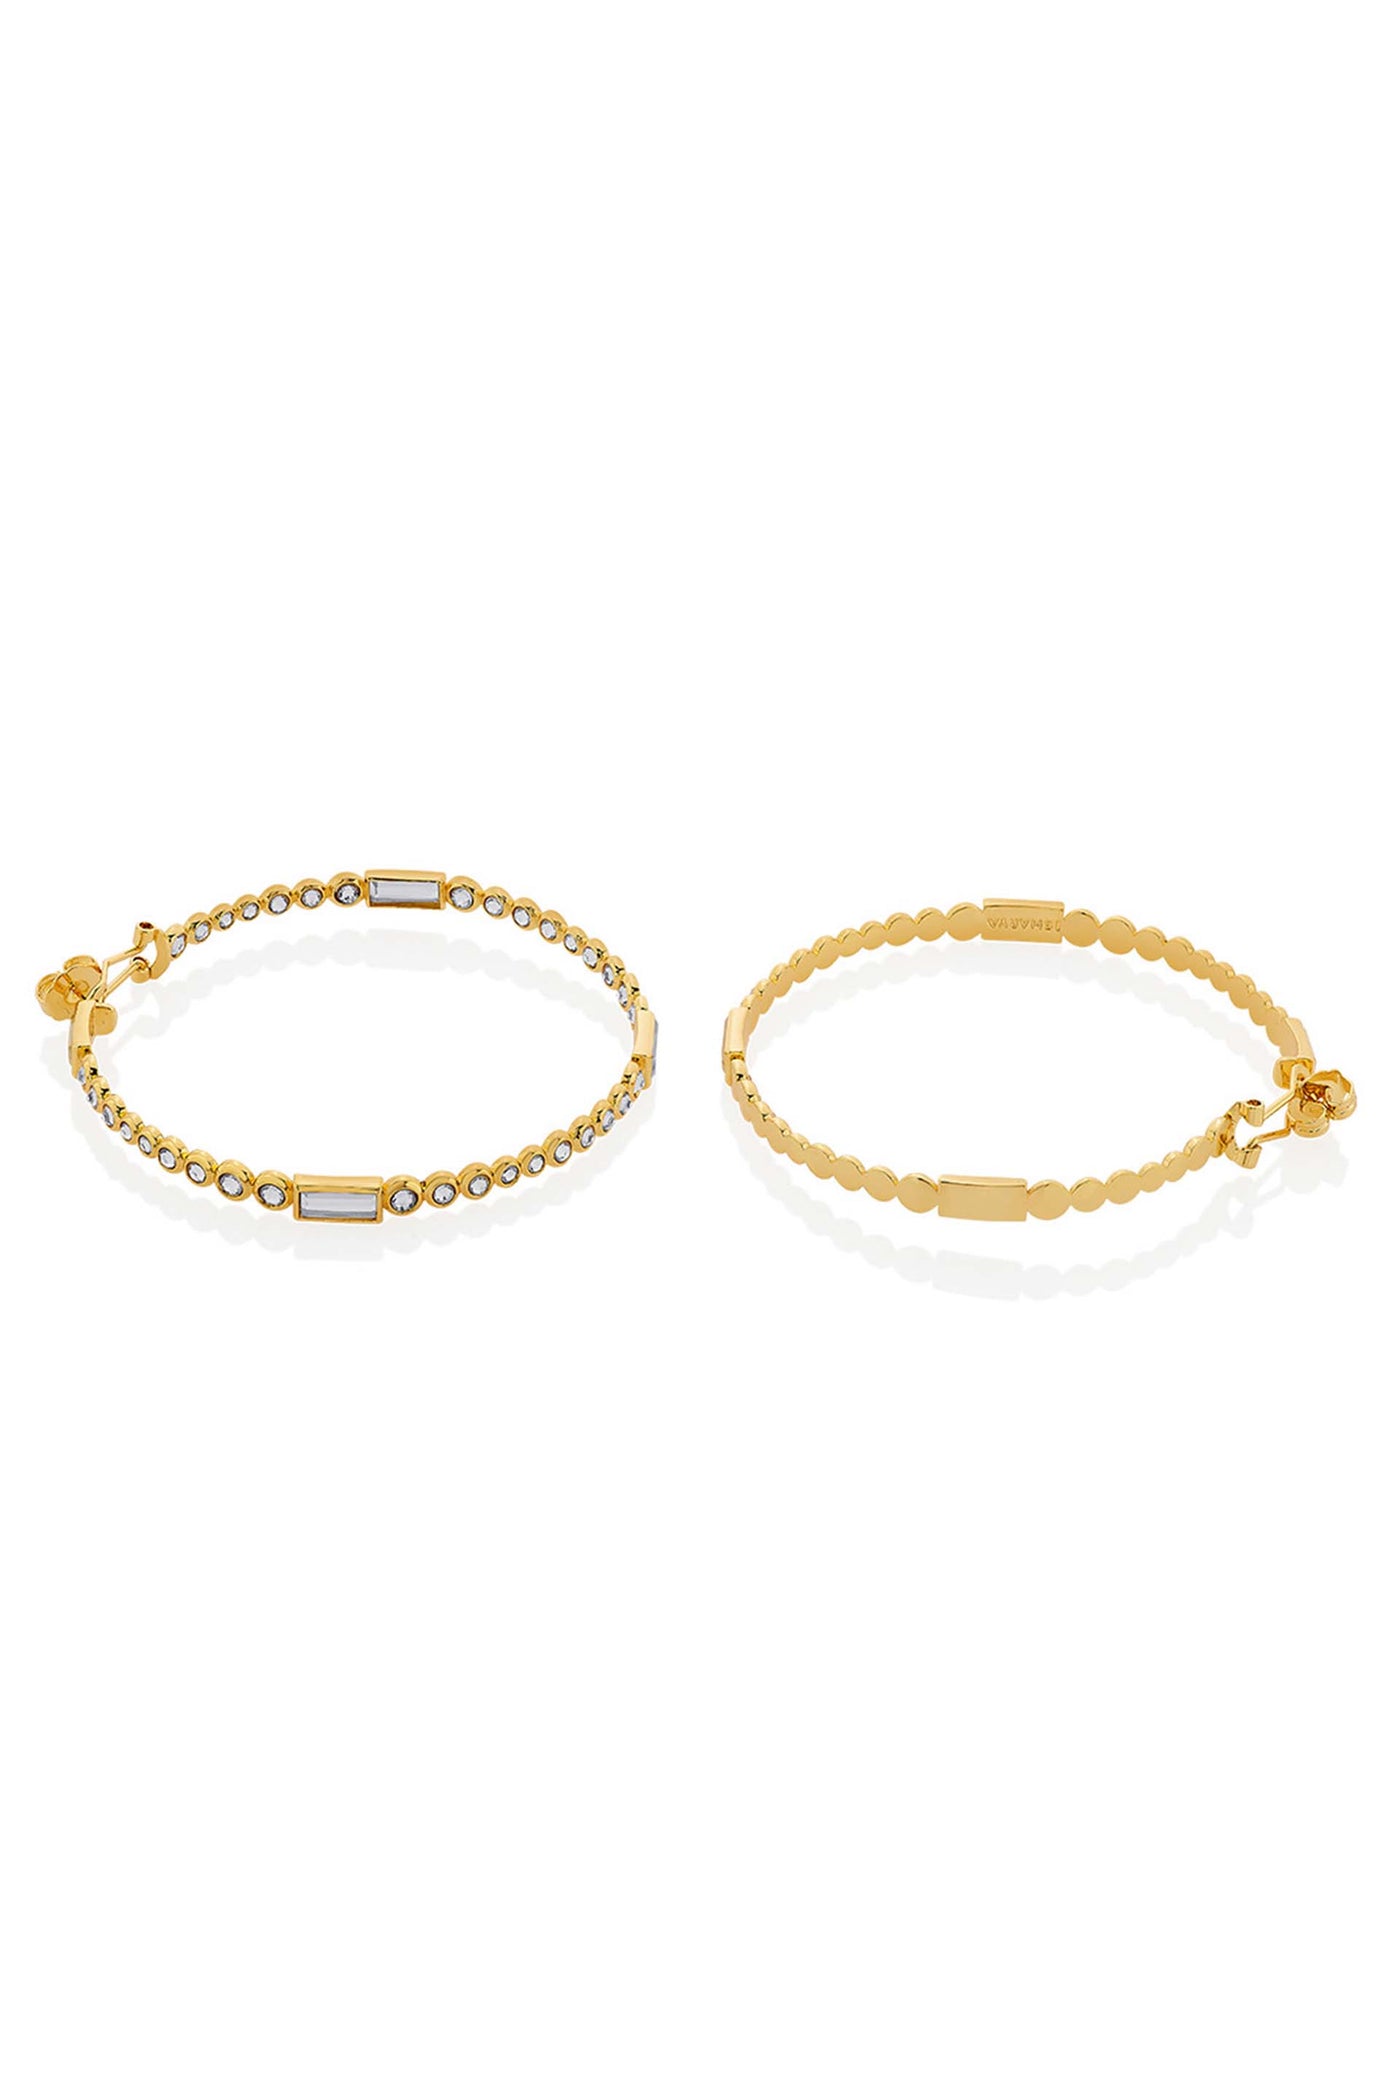 Isharya Aura Gold Oversized Hoop Earrings In 18kt Gold Plated fashion jewellery online shopping melange singapore indian designer wear